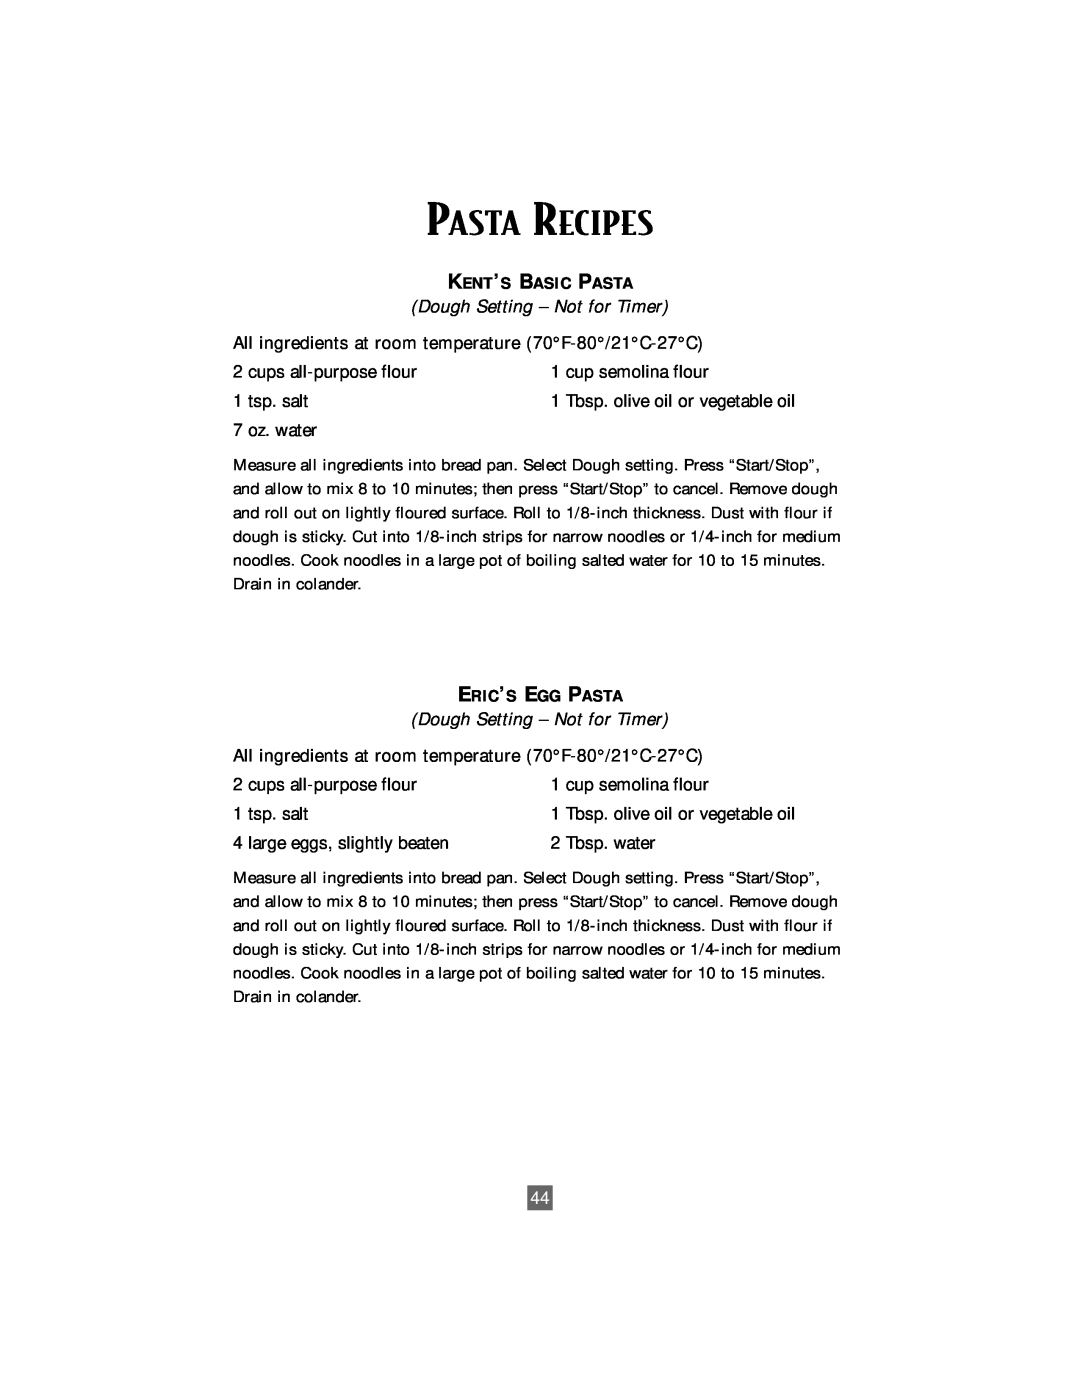 Oster P. N. 101017 manual Pasta Recipes, Dough Setting - Not for Timer, Kent’S Basic Pasta, Eric’S Egg Pasta 